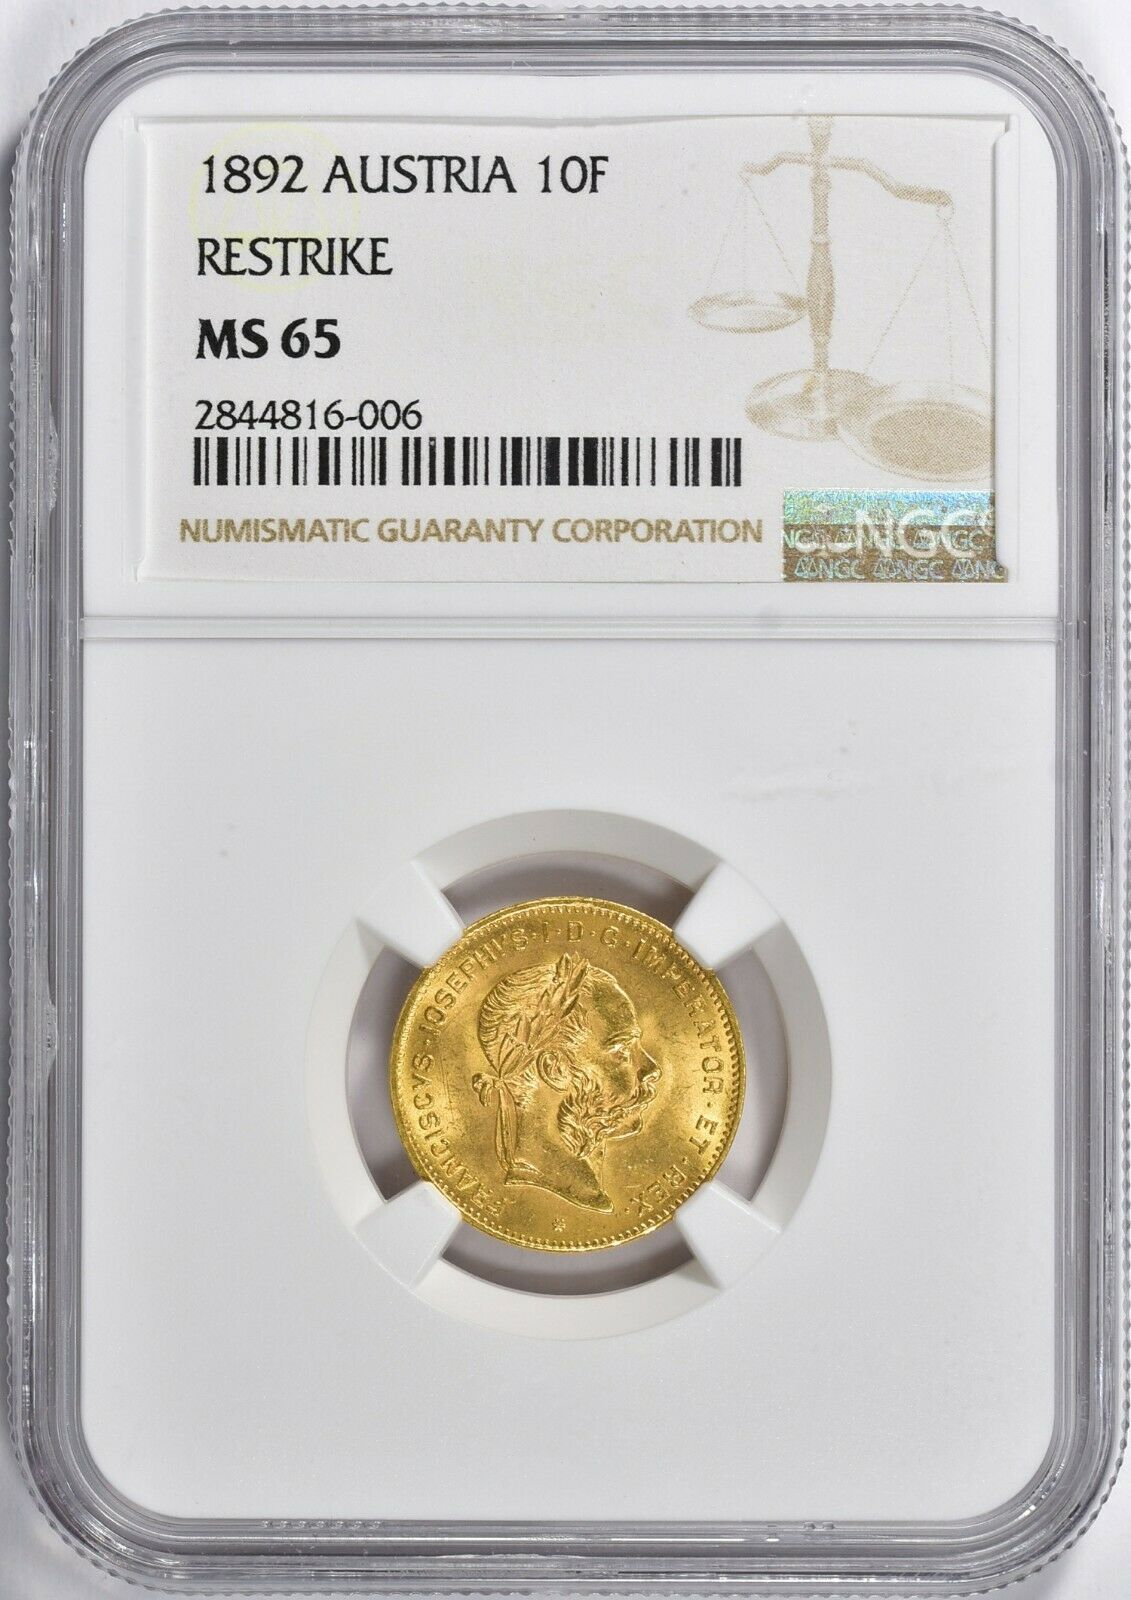 1892 Austria 10 Francs (4 Florins) Gold Restrike Coin Ngc Ms 65